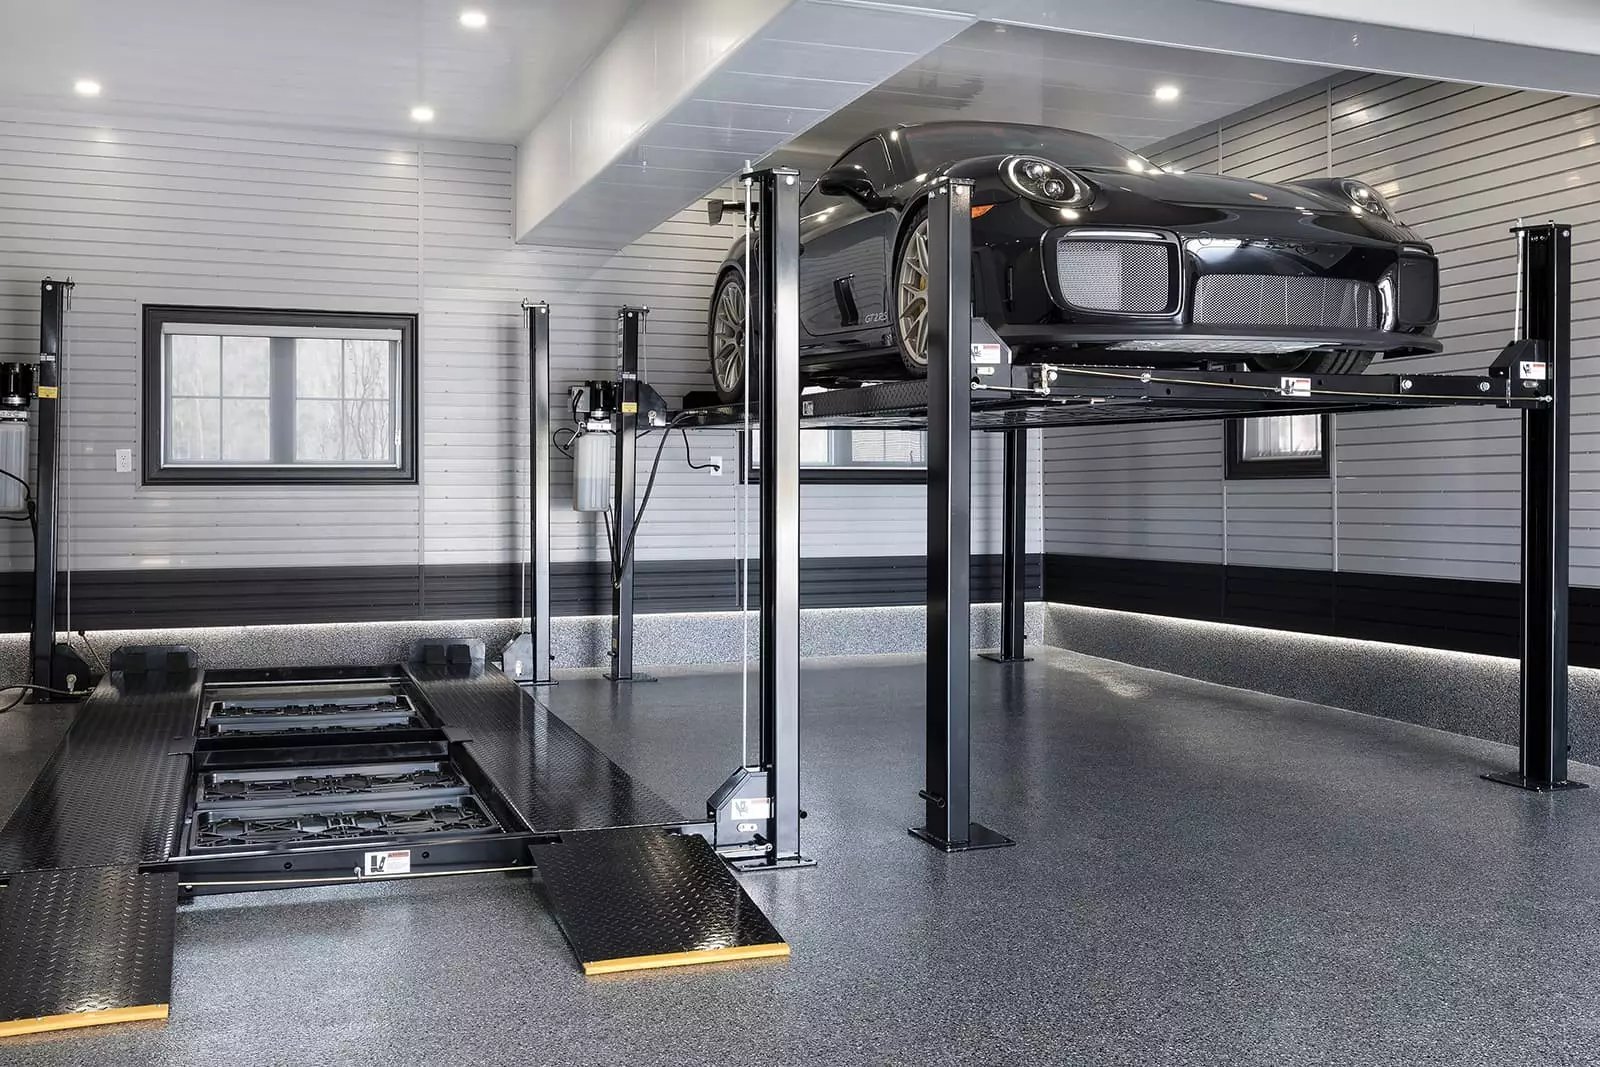 Create a Sliding Overhead Storage System - Garage Gym Organization